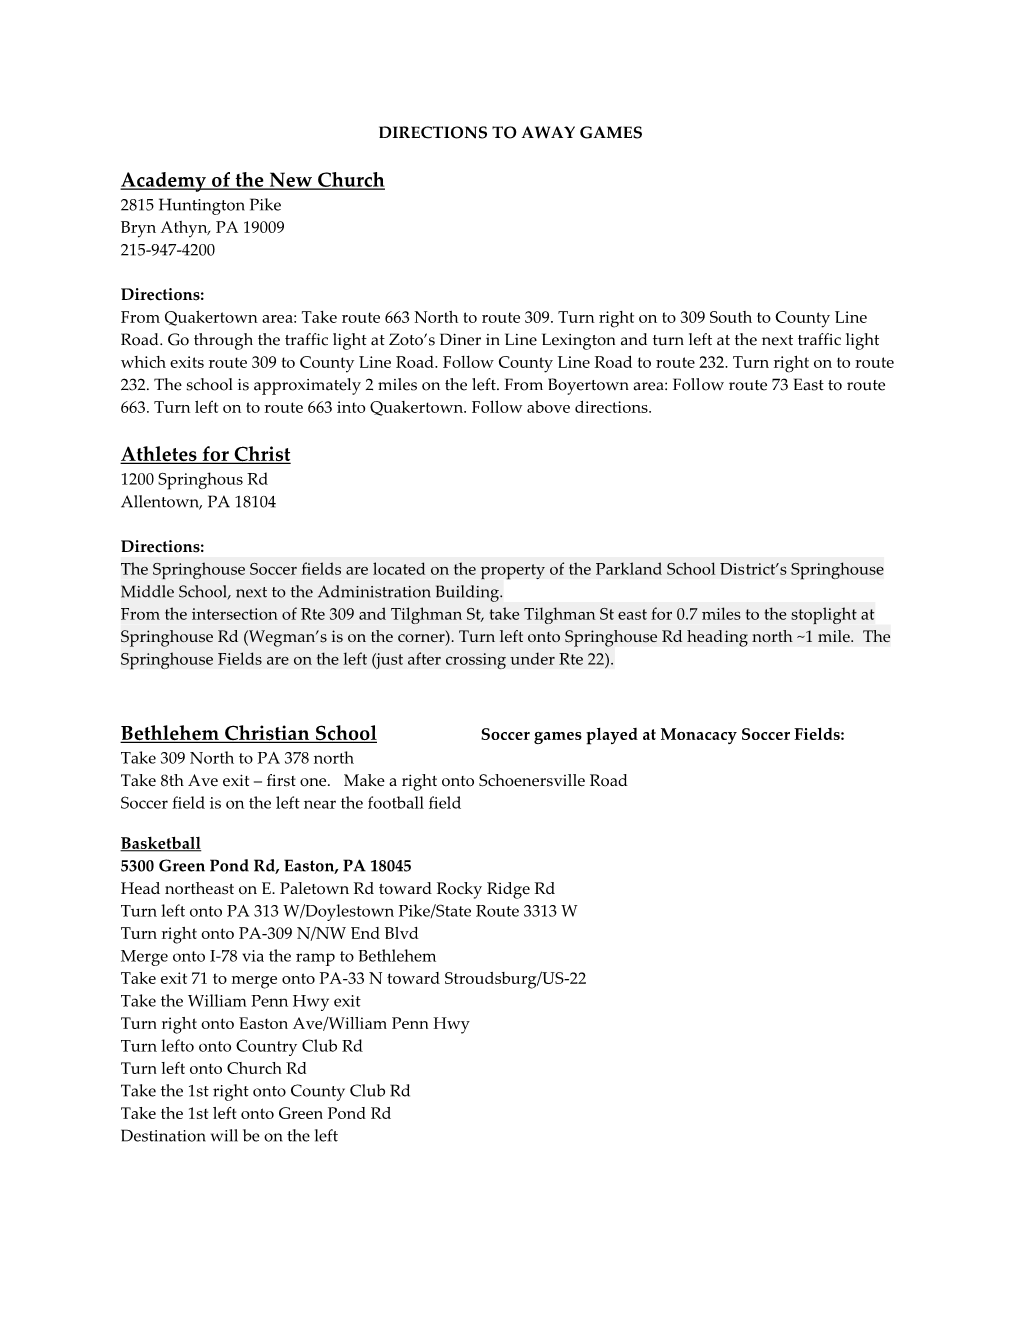 Academy of the New Church Athletes for Christ Bethlehem Christian School